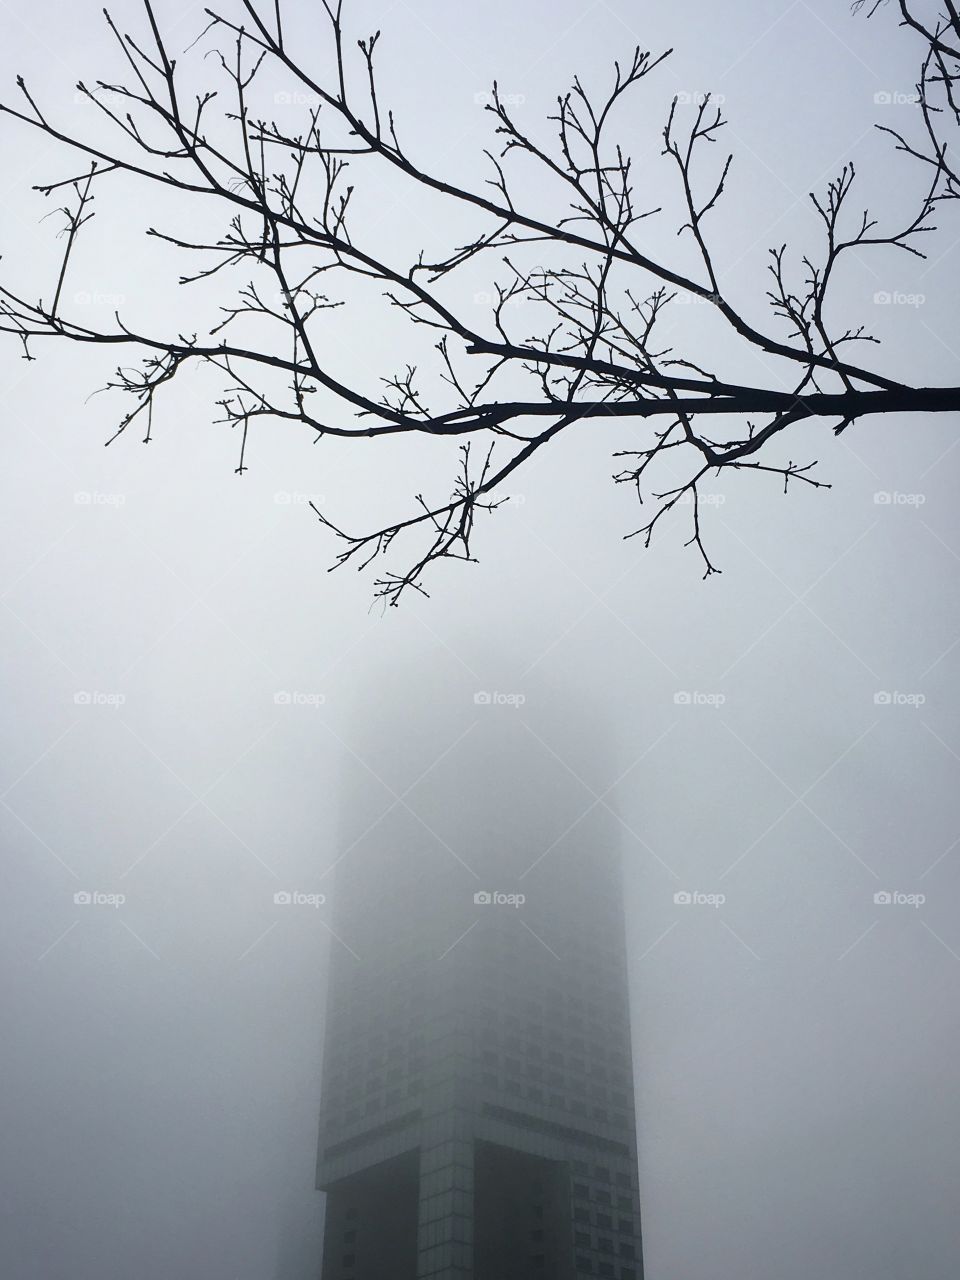 Tree hands in fog